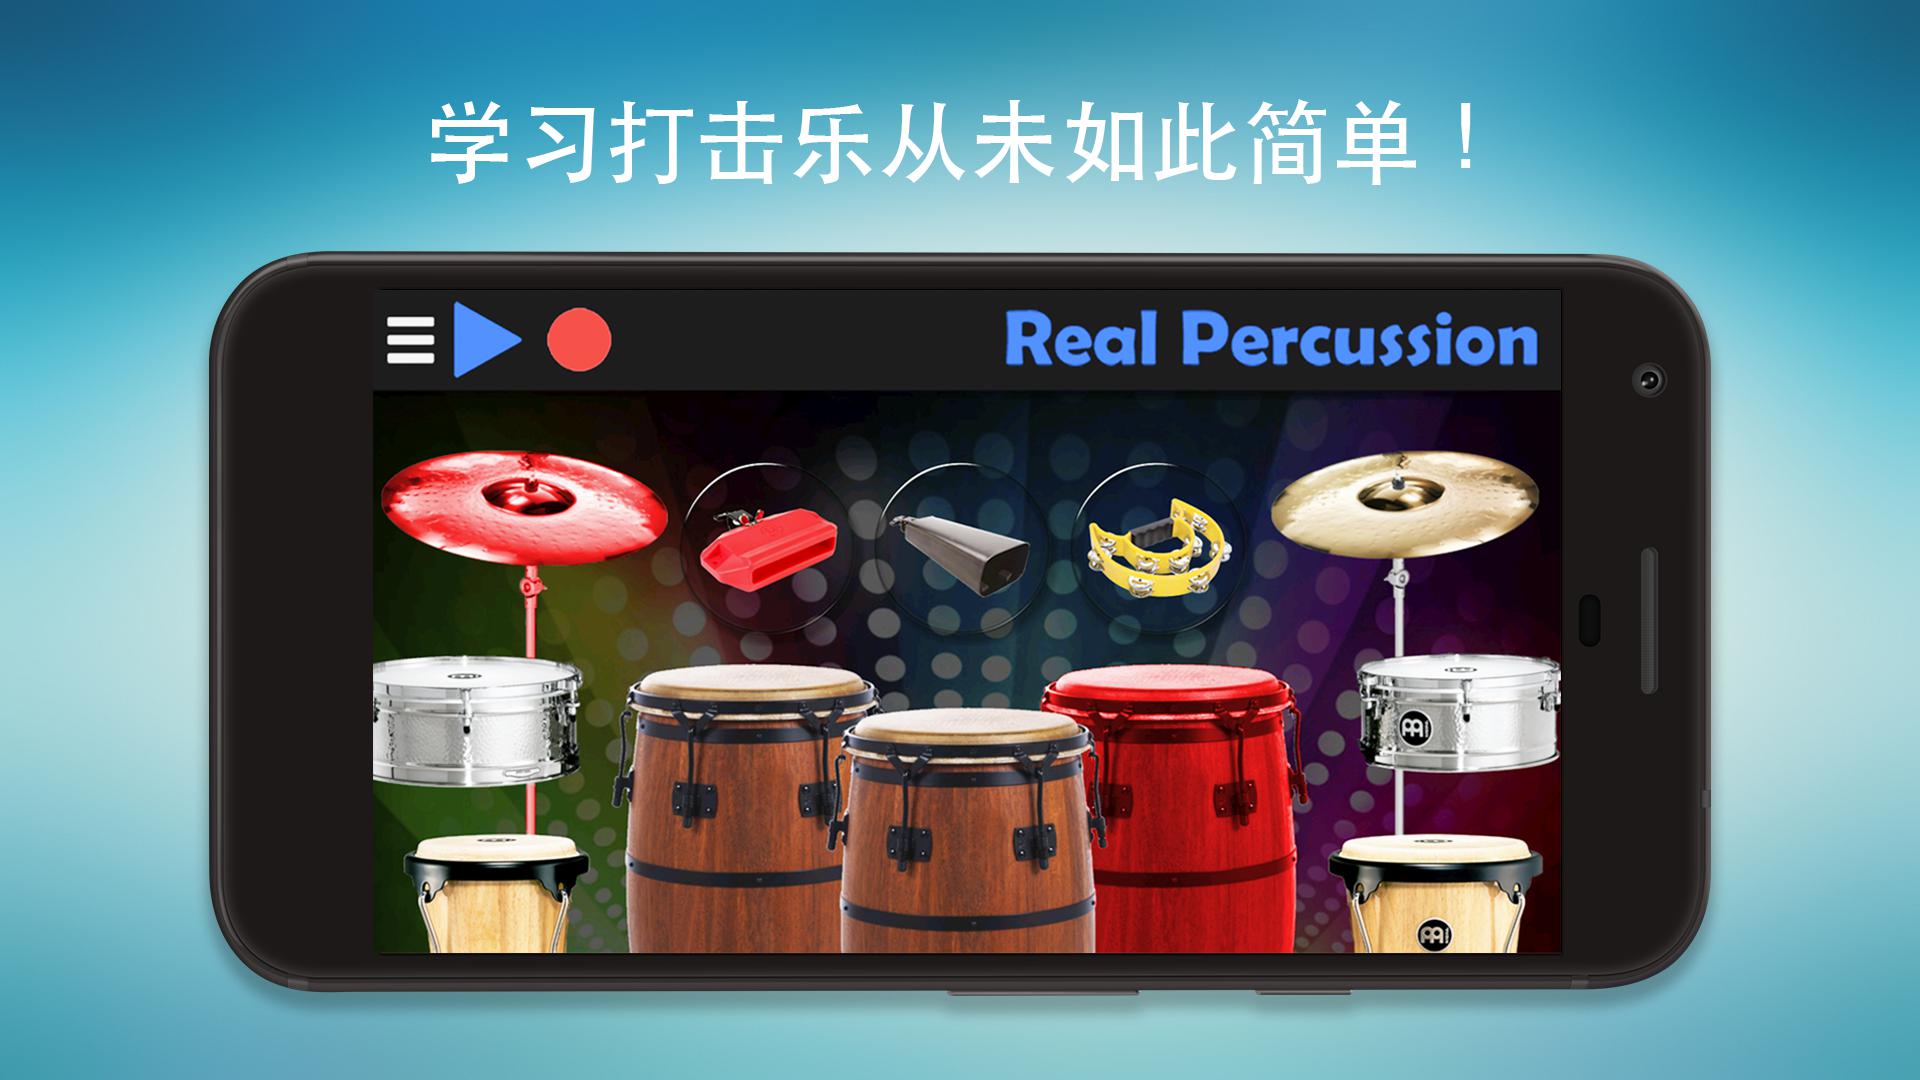 Real Percussion - 最好的打击乐器套件_截图_3